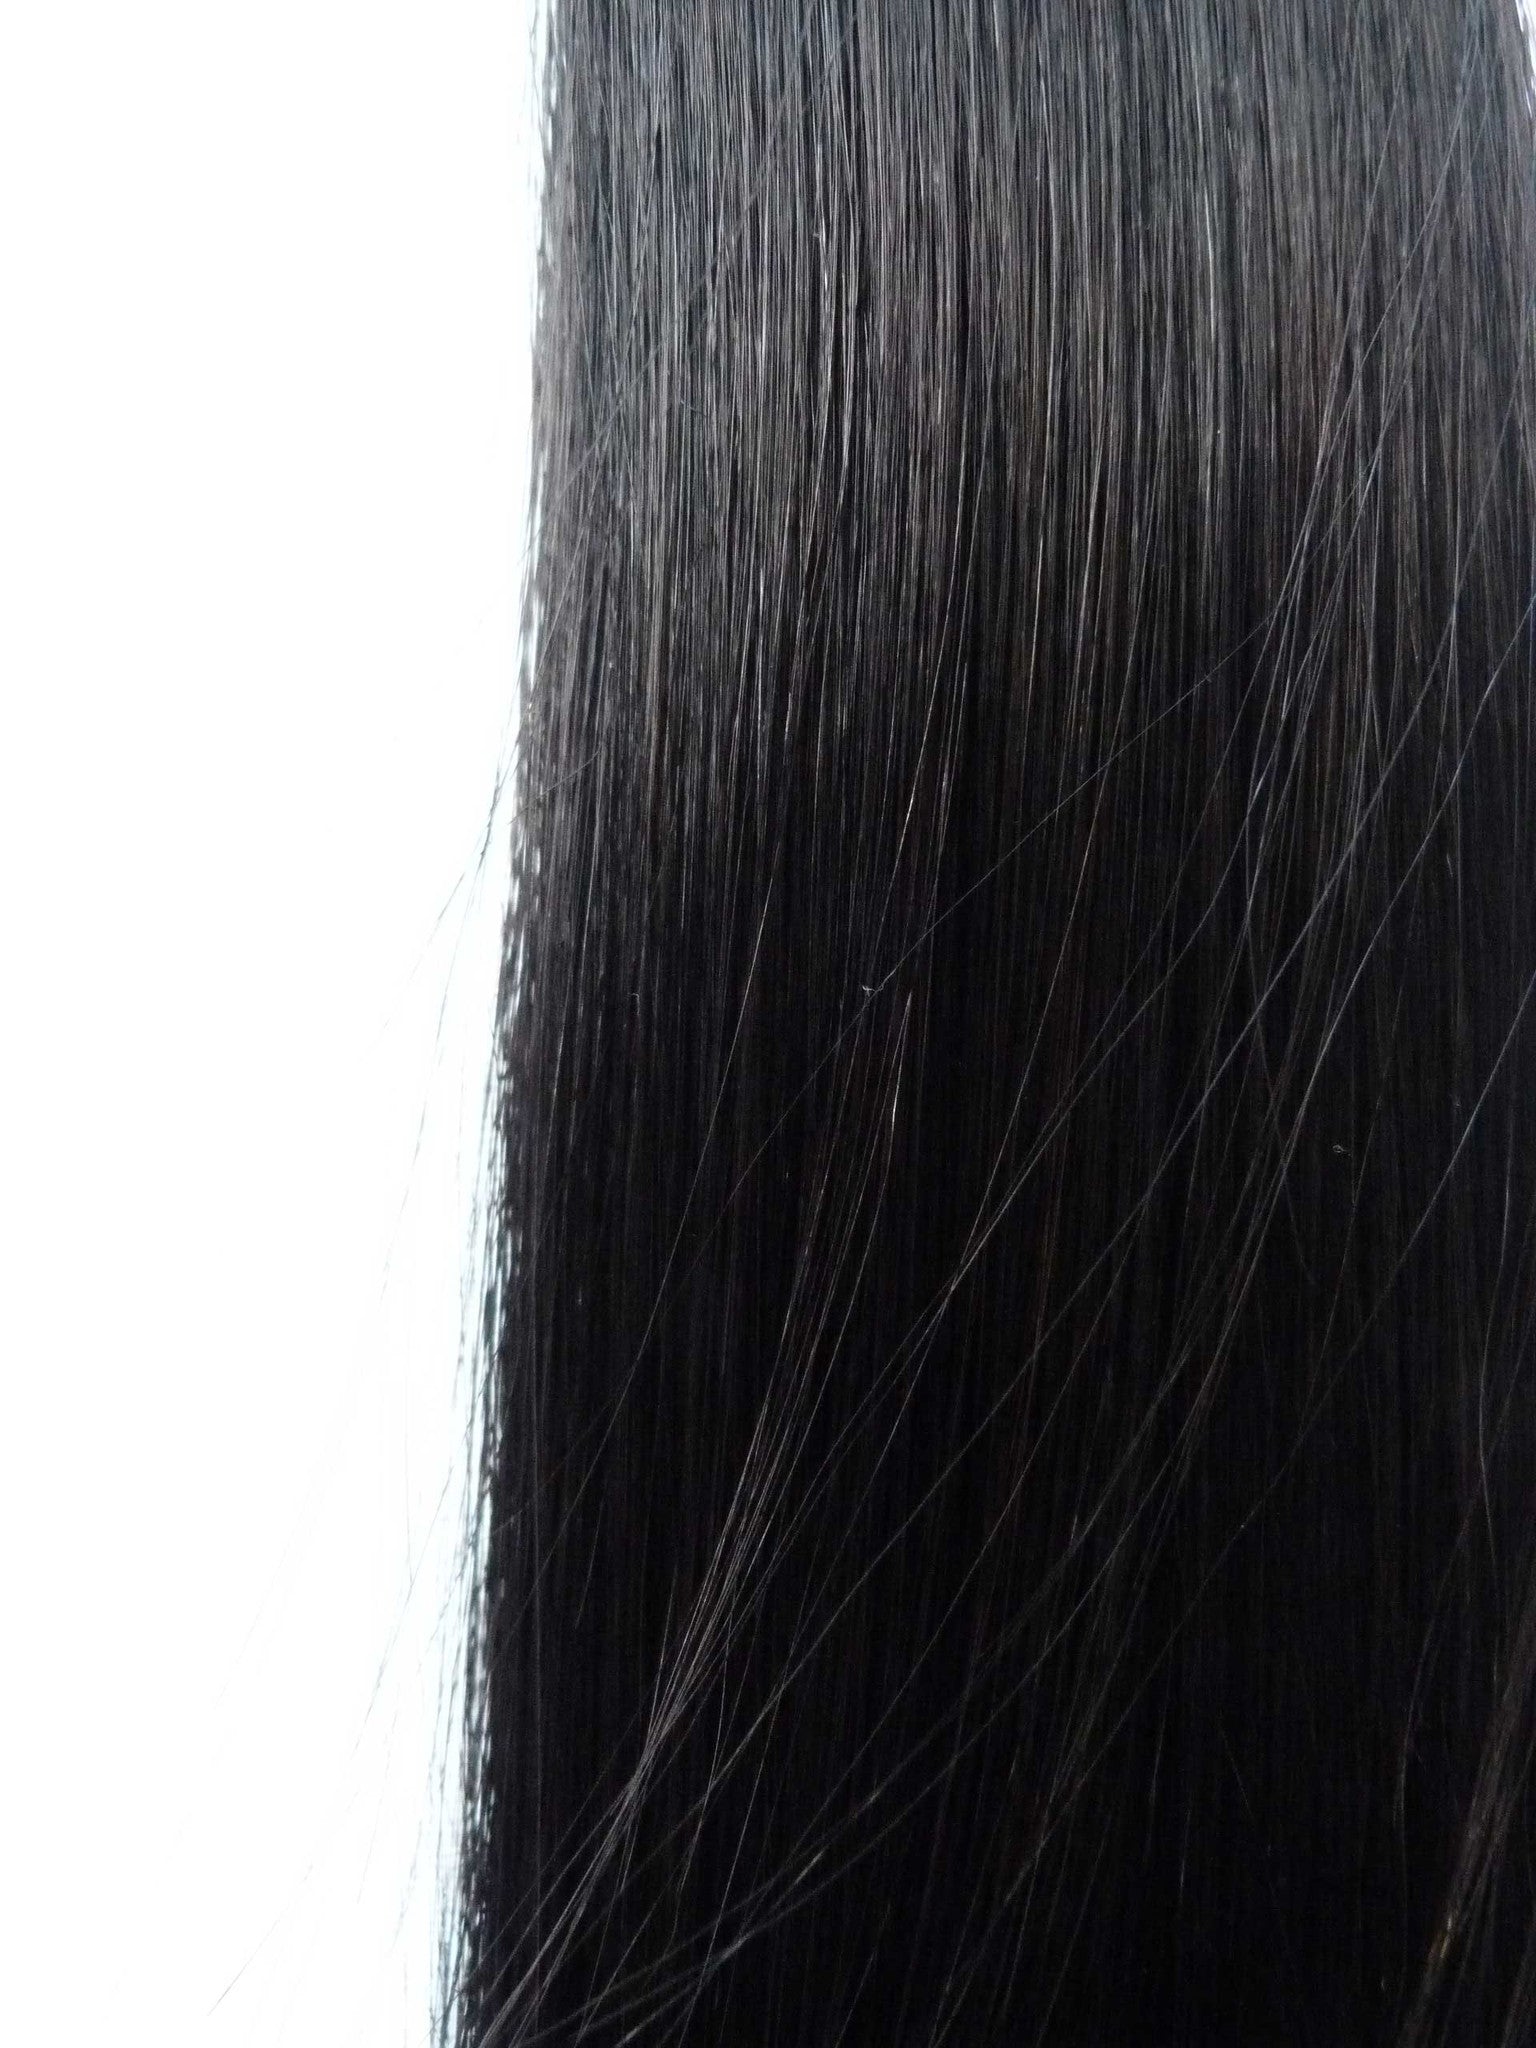 Malaysian Virgin Human Hair Extensions - Micro Loop Extensions-Virgin Hair & Beauty, The Best Hair Extensions, Real Virgin Human Hair.